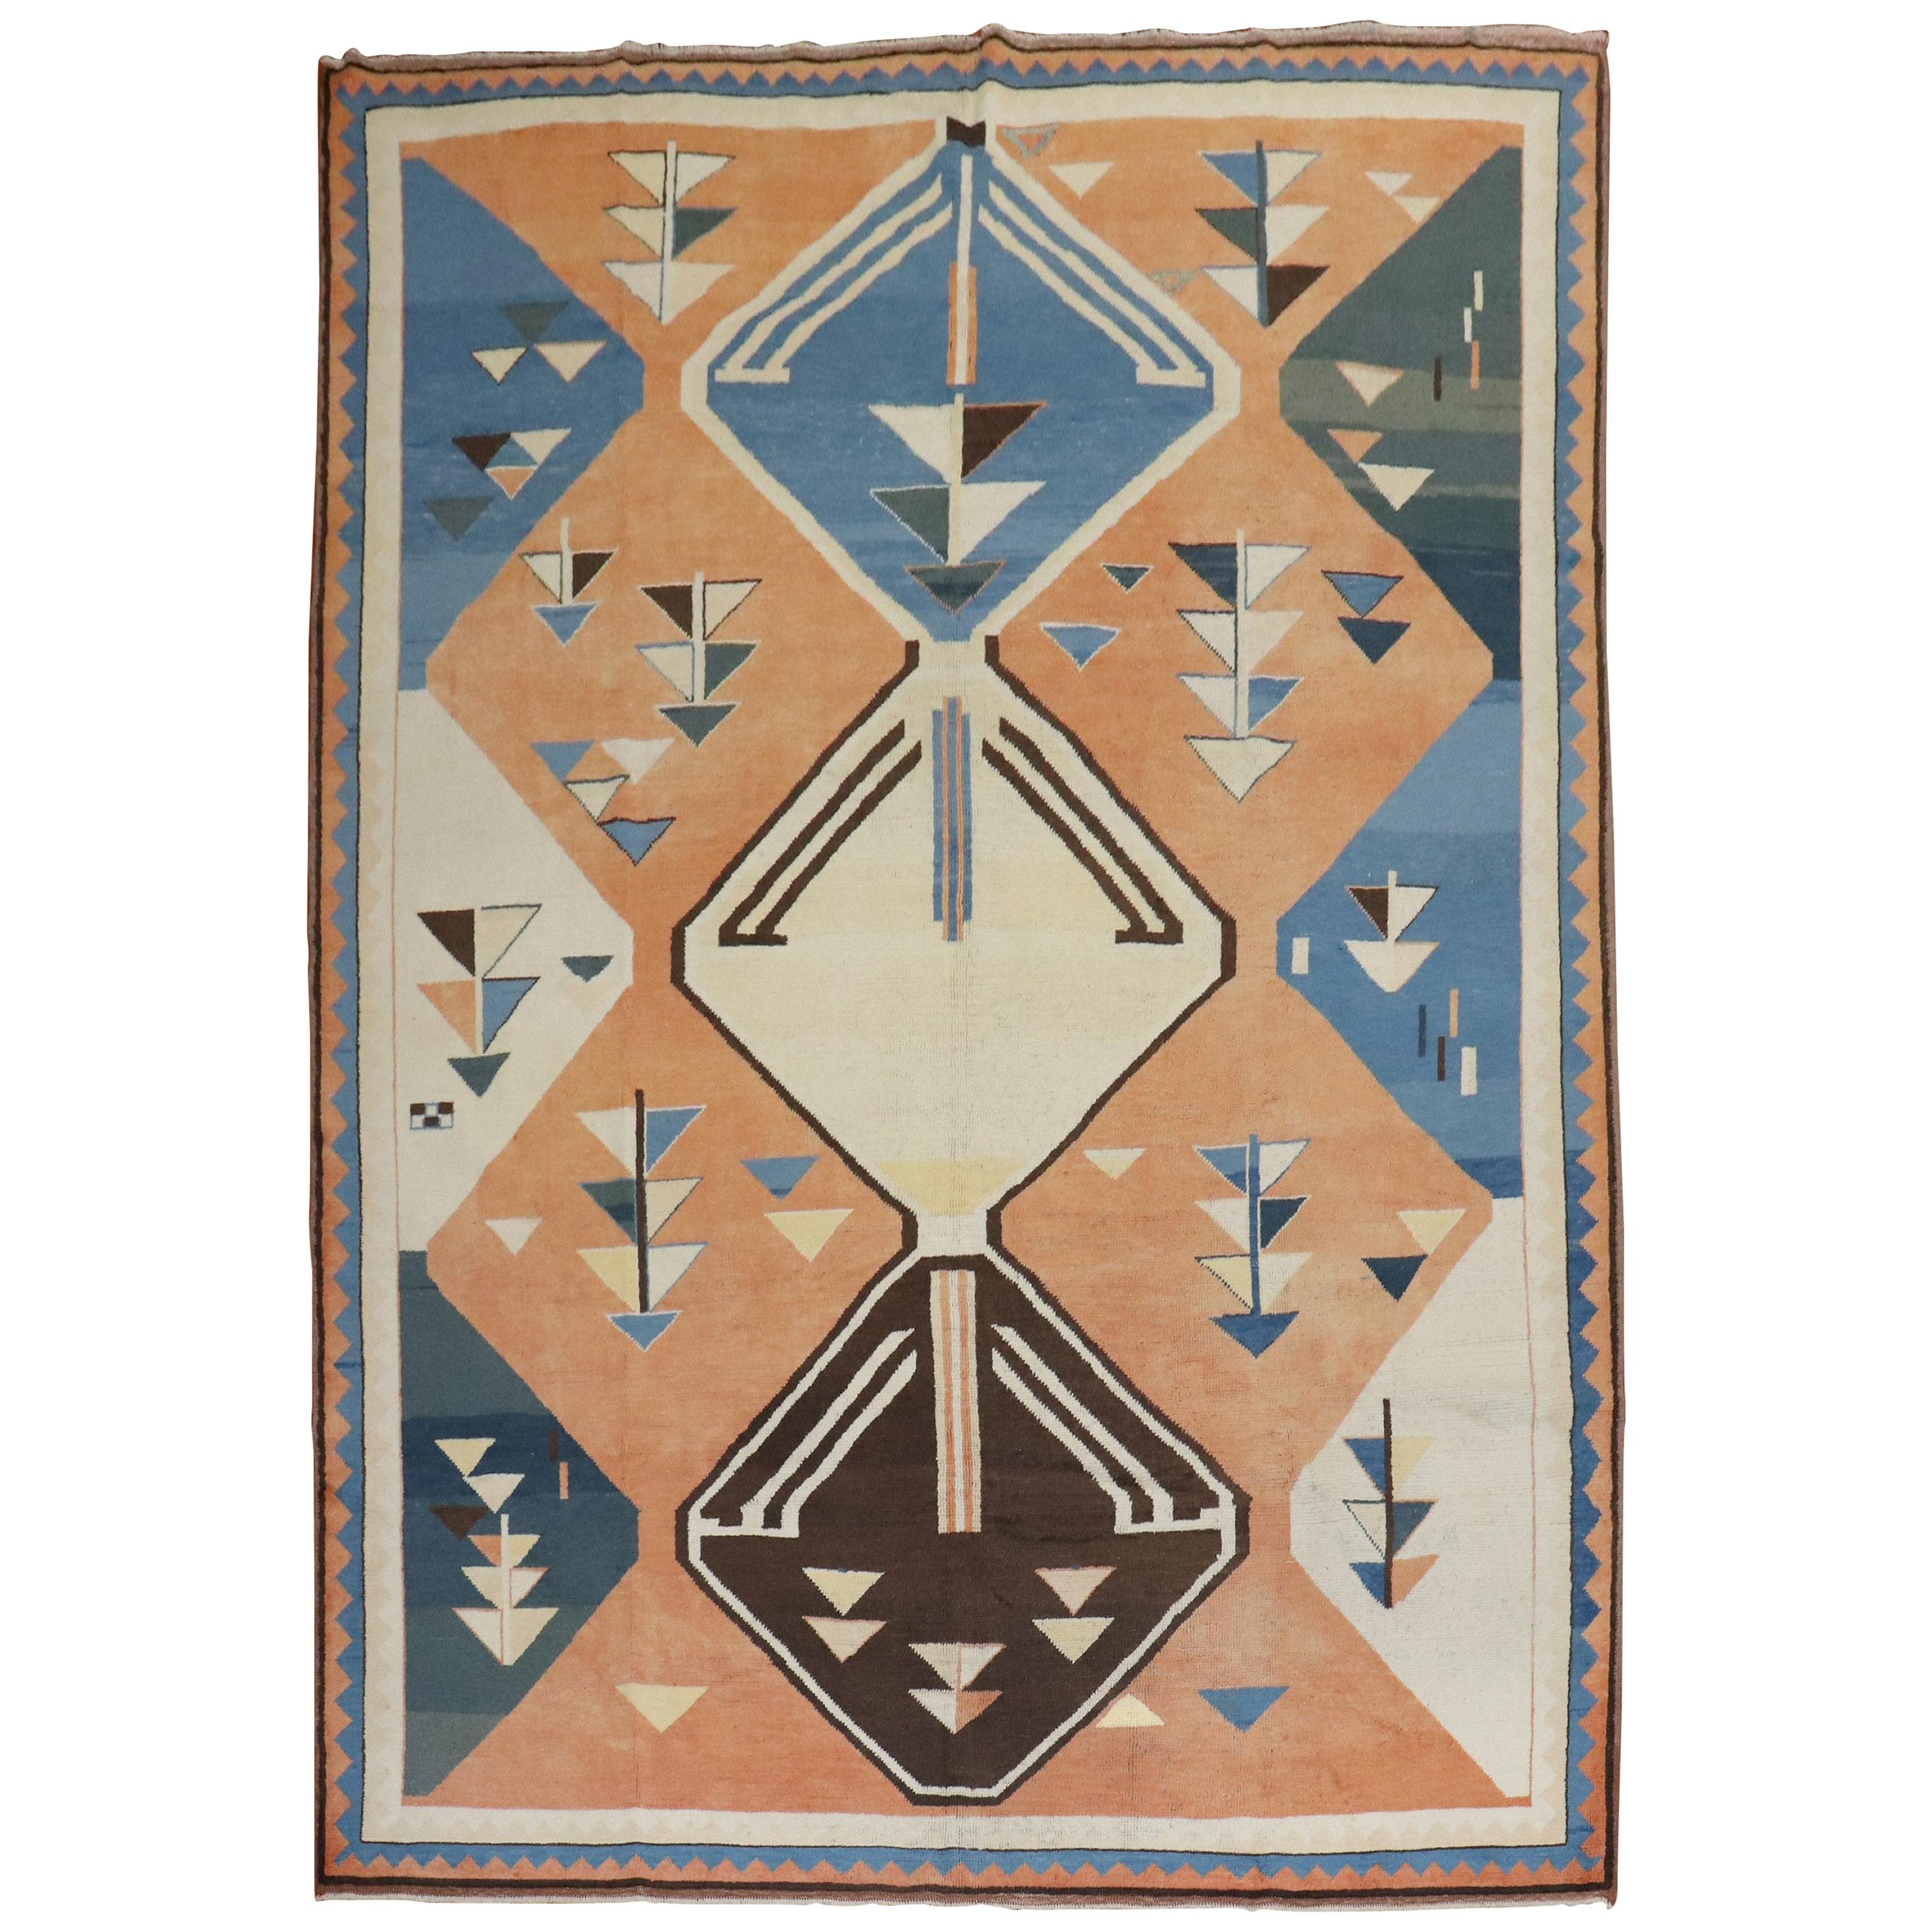 Abstract 20th Century Turkish Geometric Deco Persian Gabbeh Inspired Carpet